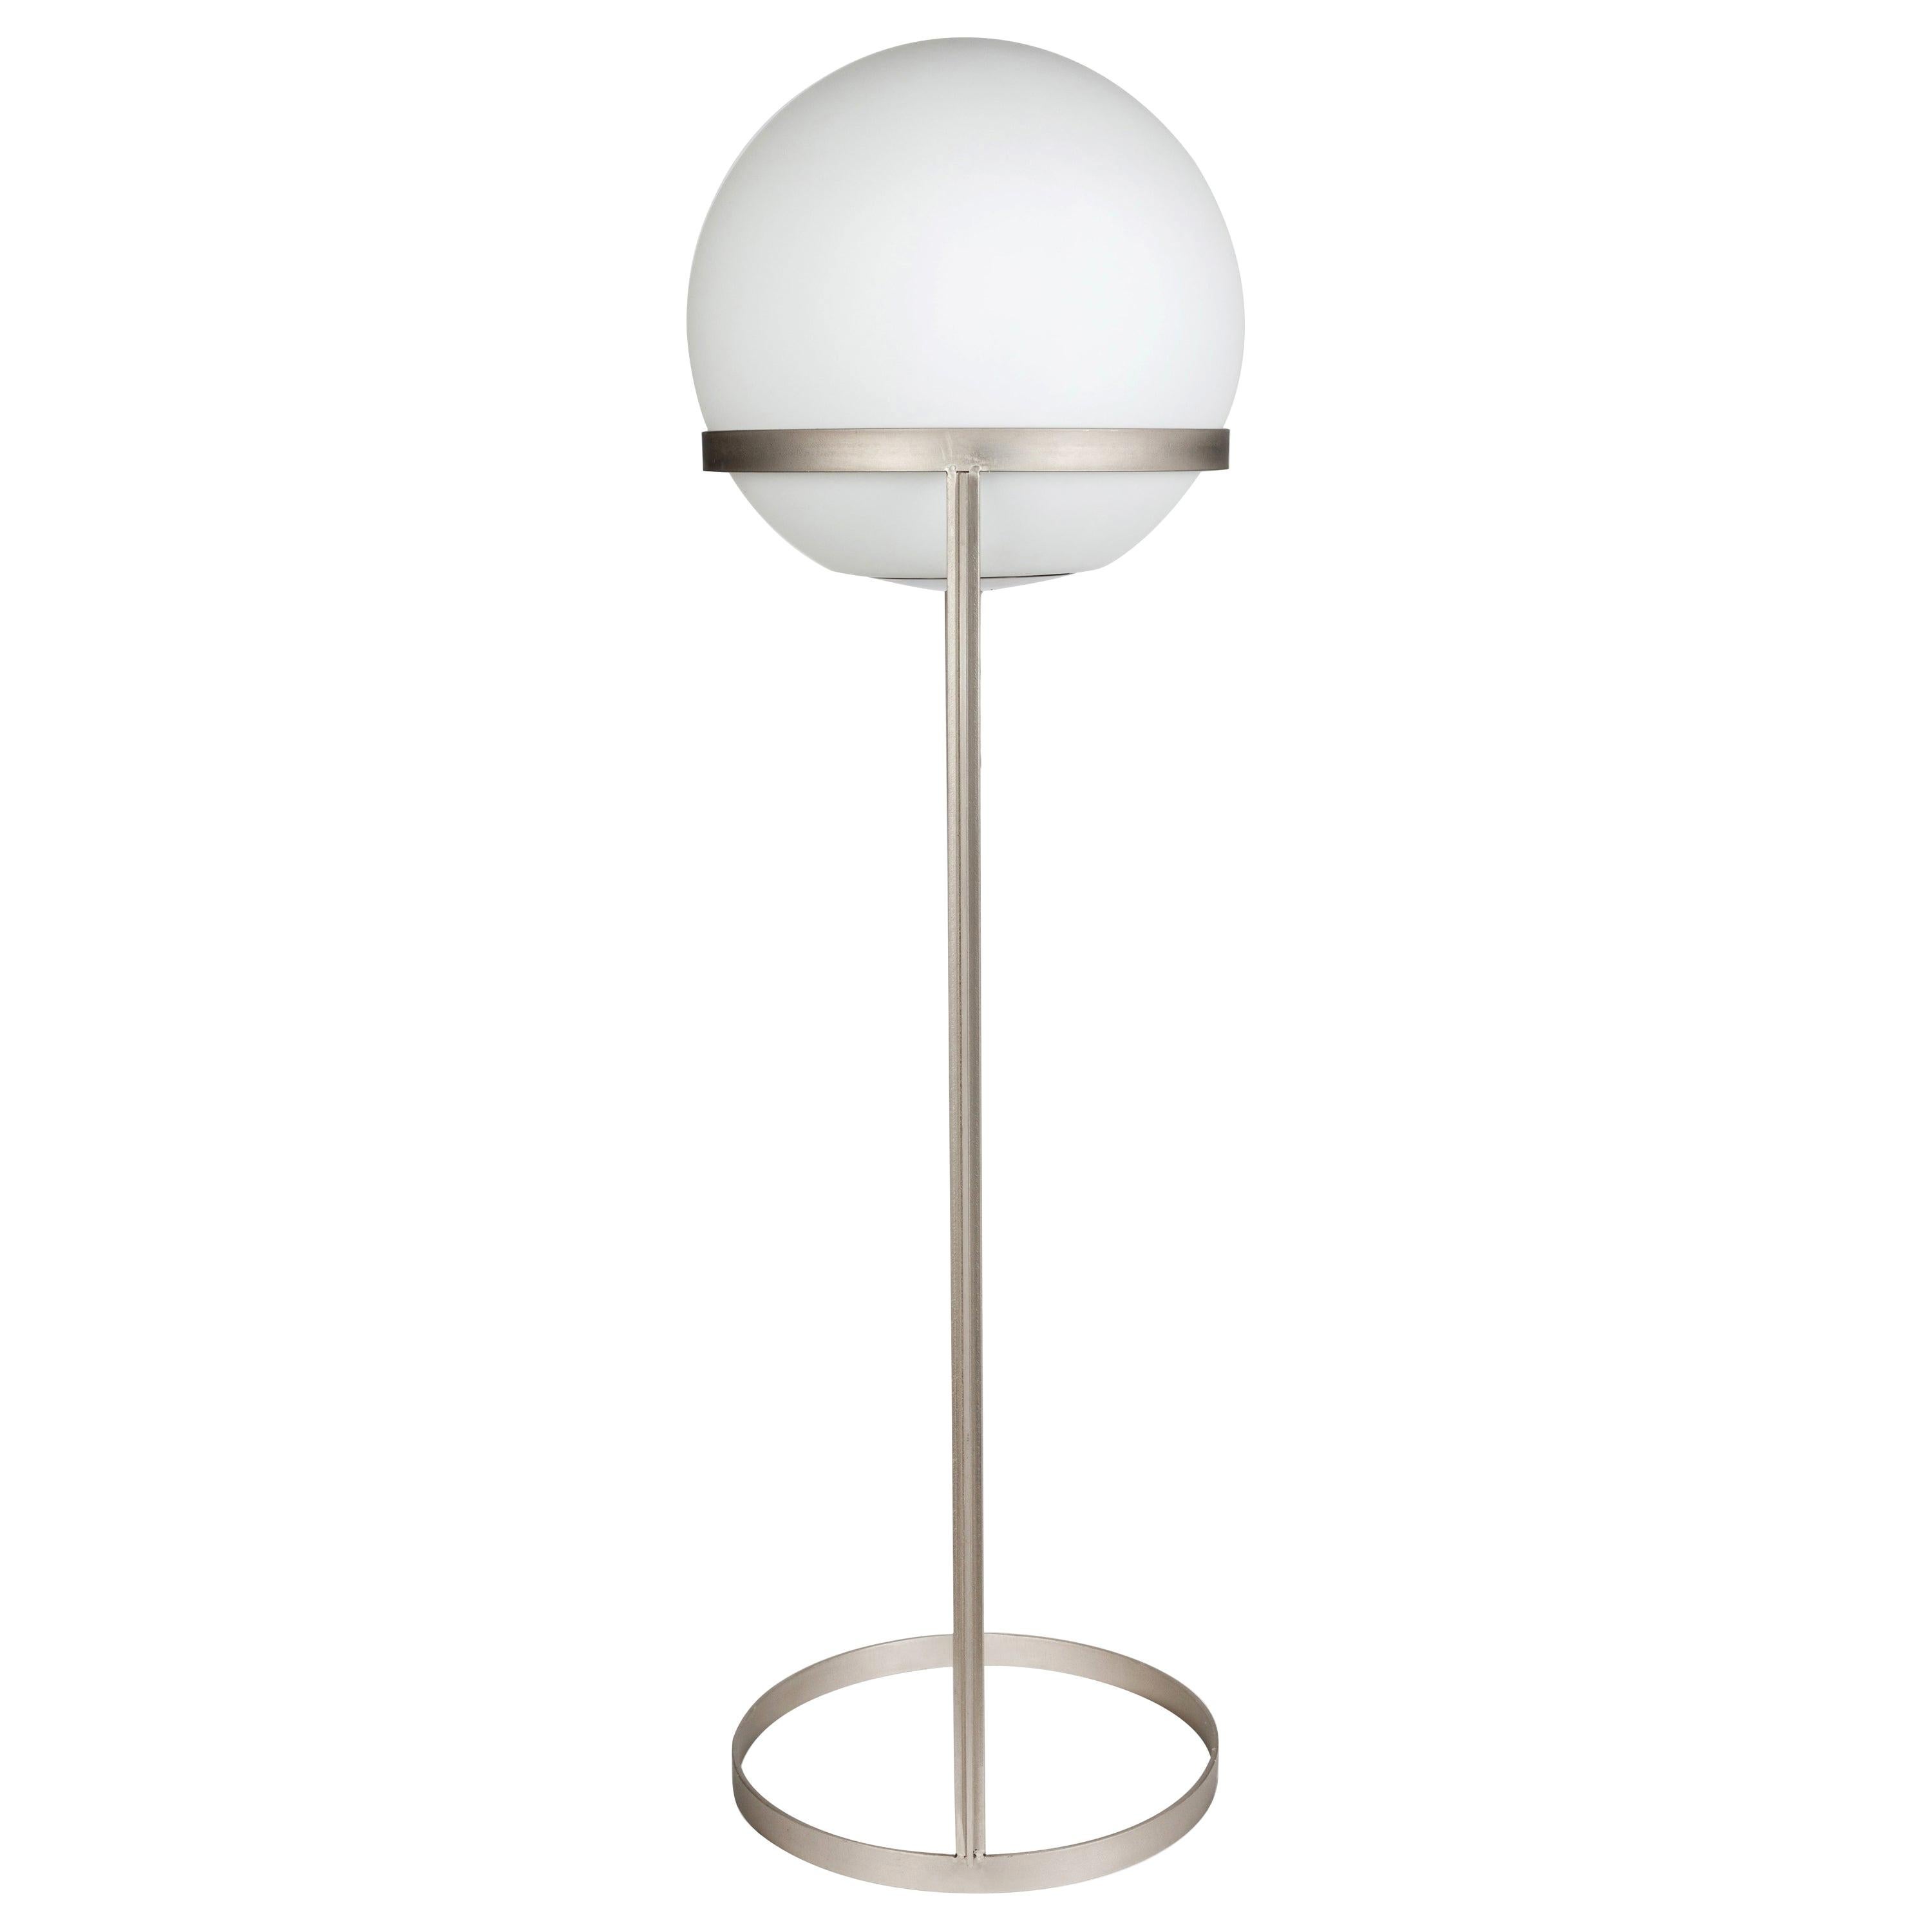 Limited Edition Carl Auböck Model 4095 Floor Lamp